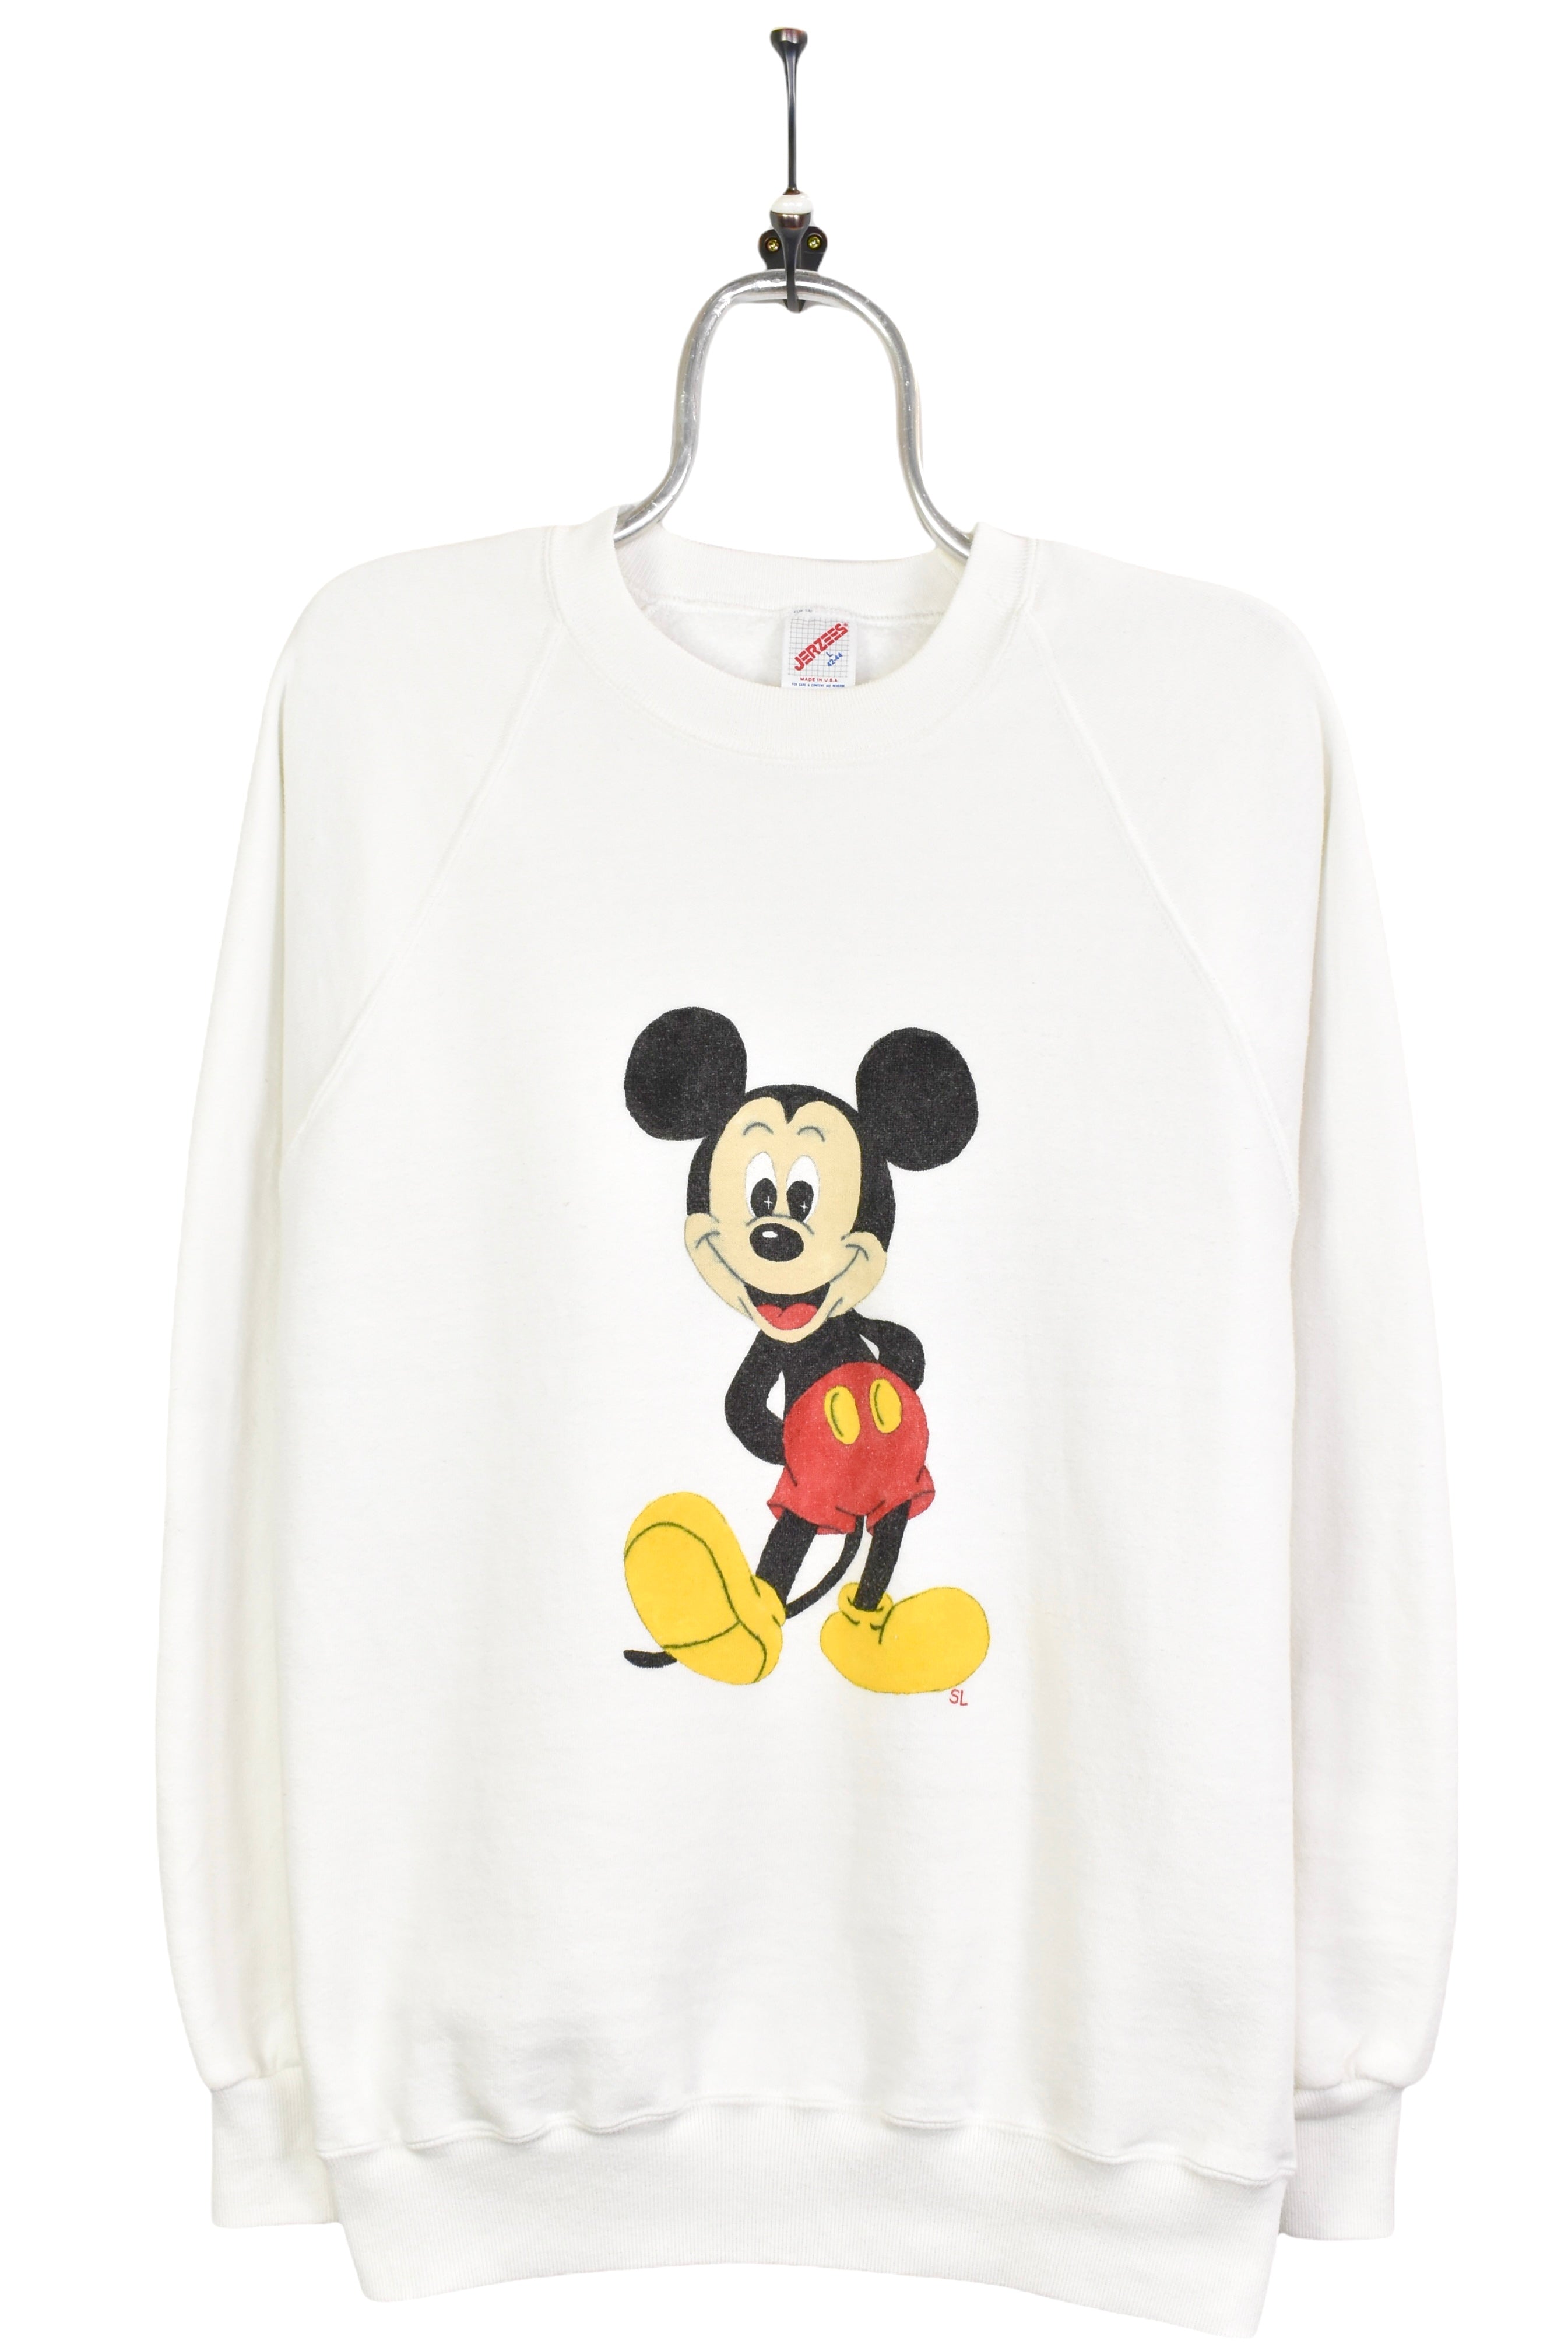 Vintage Disney Mickey white sweatshirt | Medium DISNEY / CARTOON